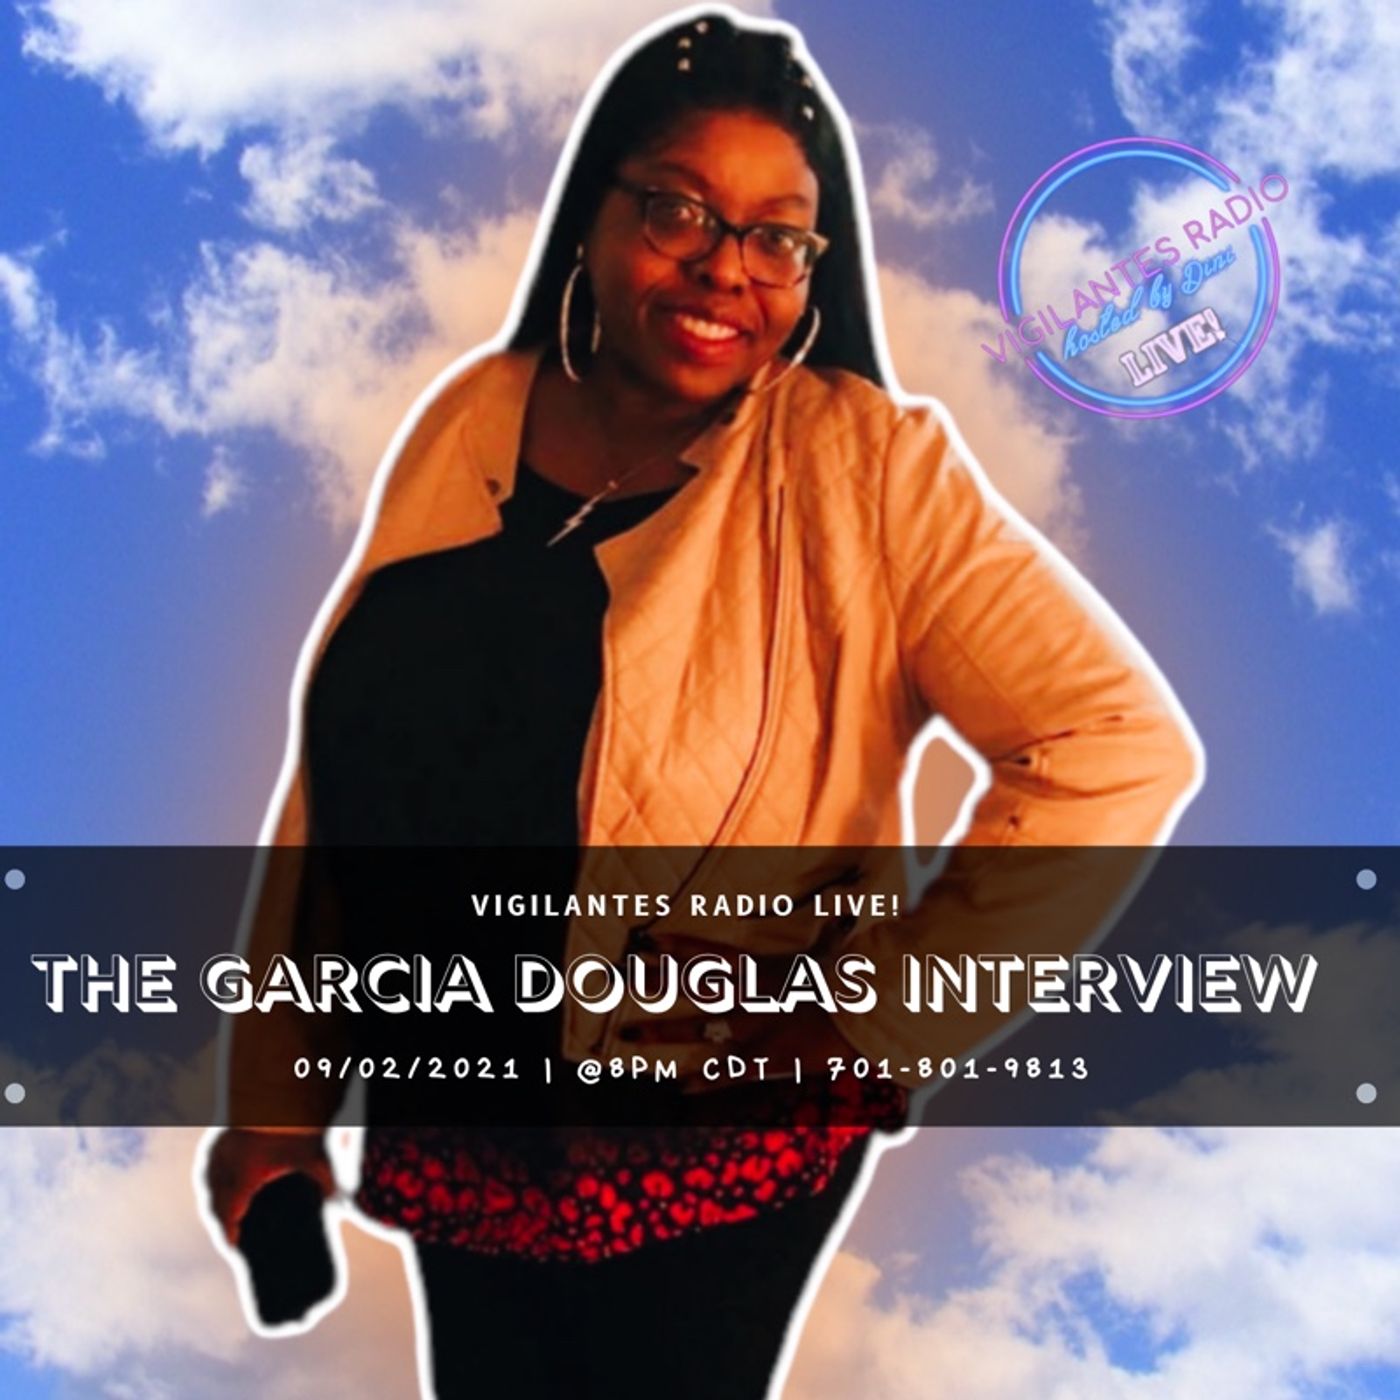 The Garcia Douglas Interview. Image